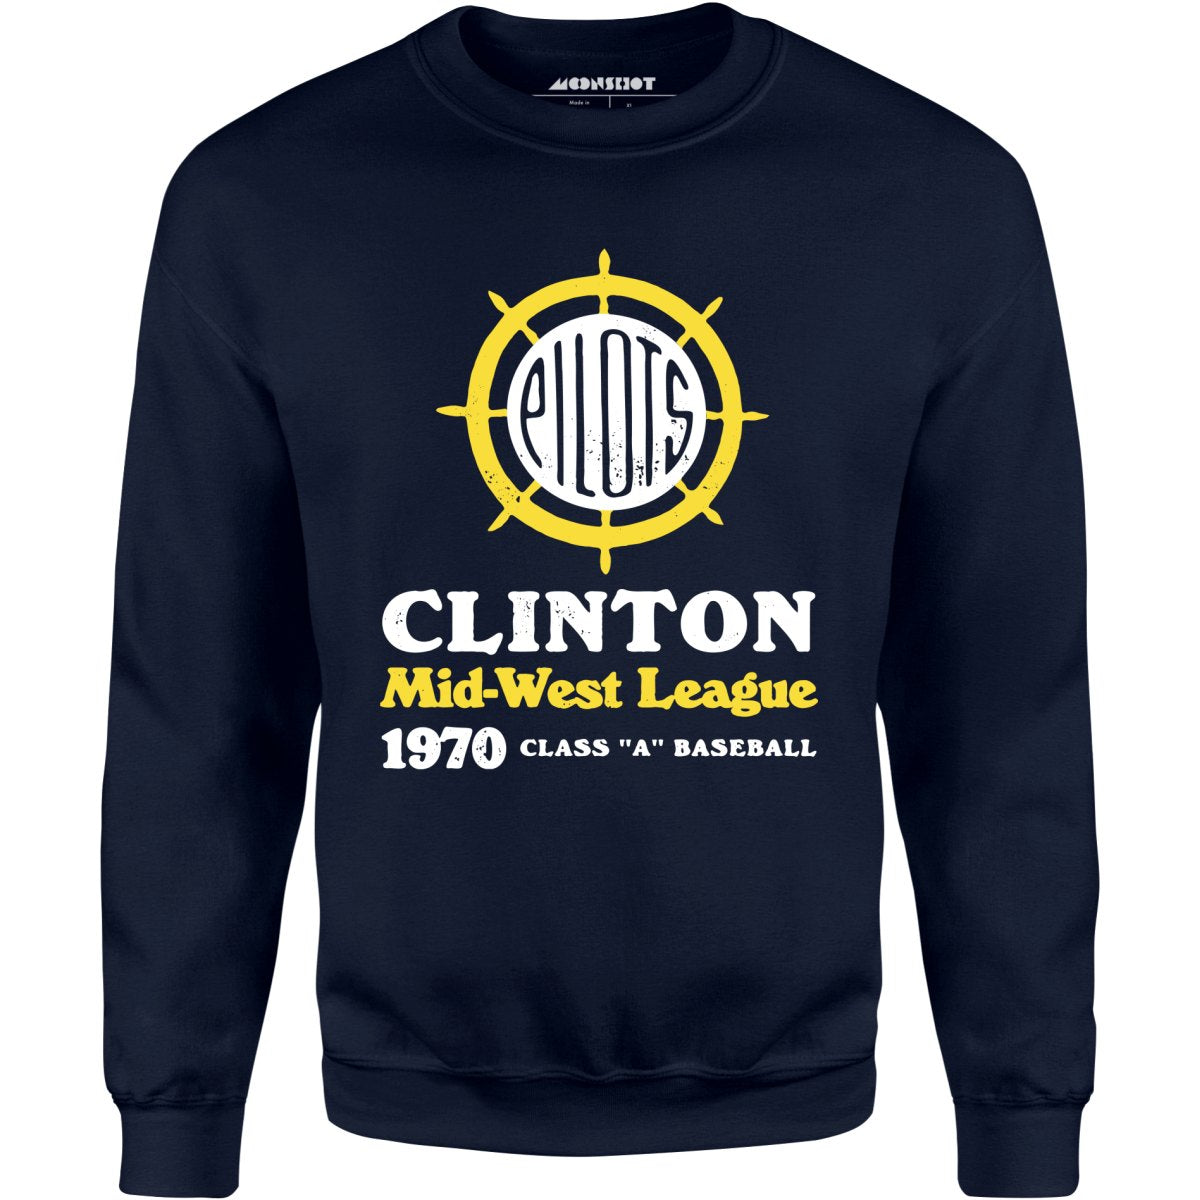 Clinton Pilots - Iowa - Vintage Defunct Baseball Teams - Unisex Sweatshirt